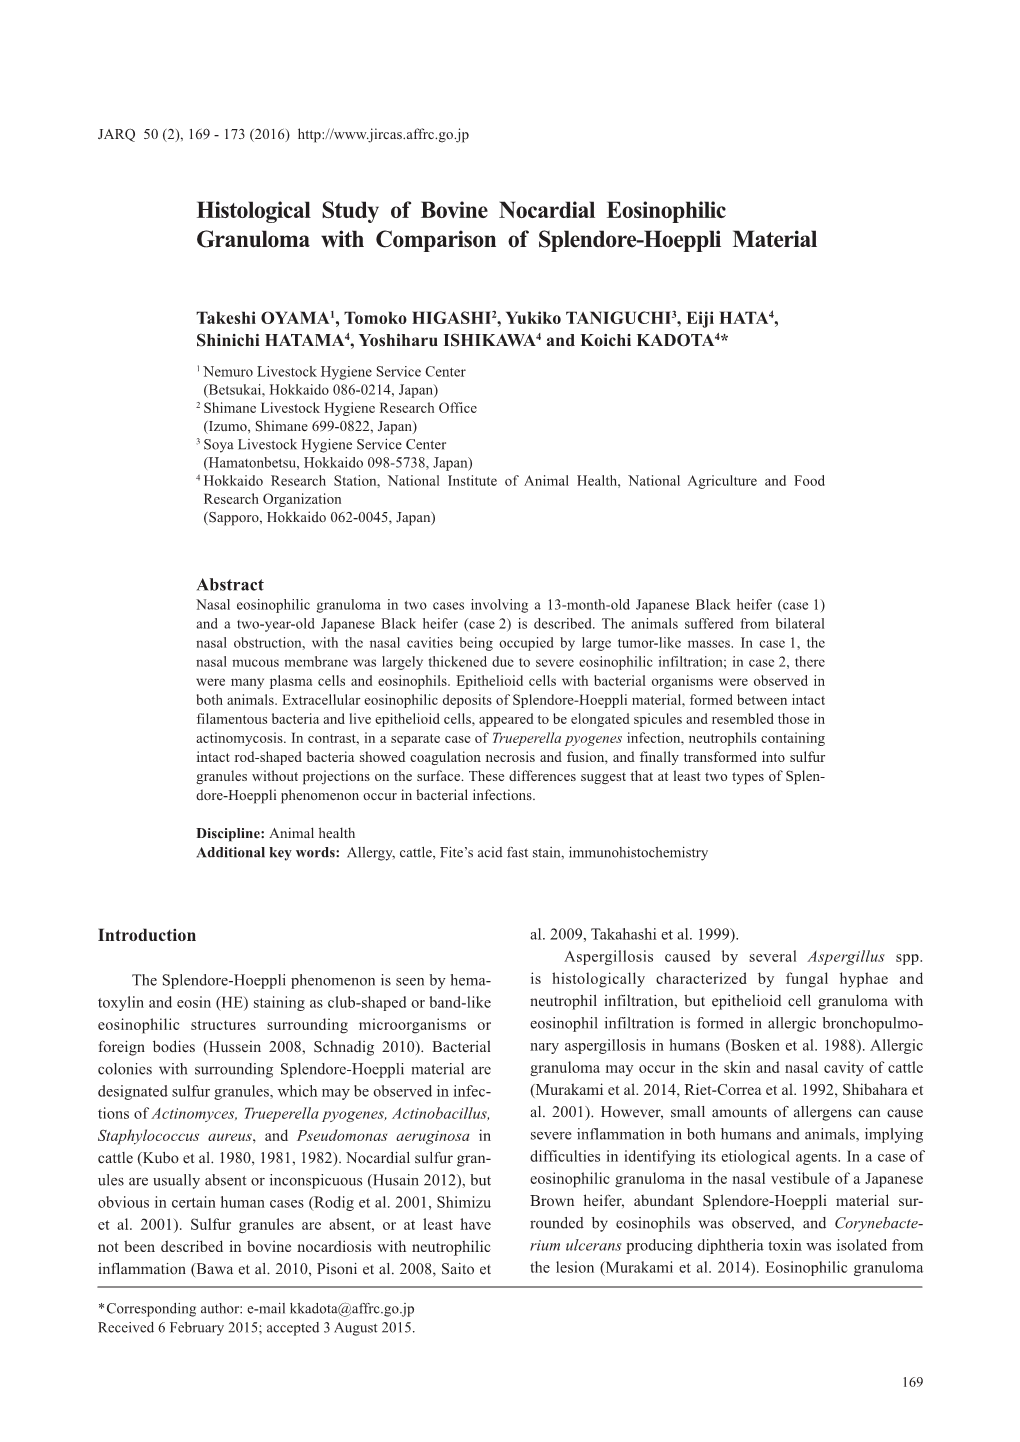 Histological Study of Bovine Nocardial Eosinophilic Granuloma with Comparison of Splendore-Hoeppli Material